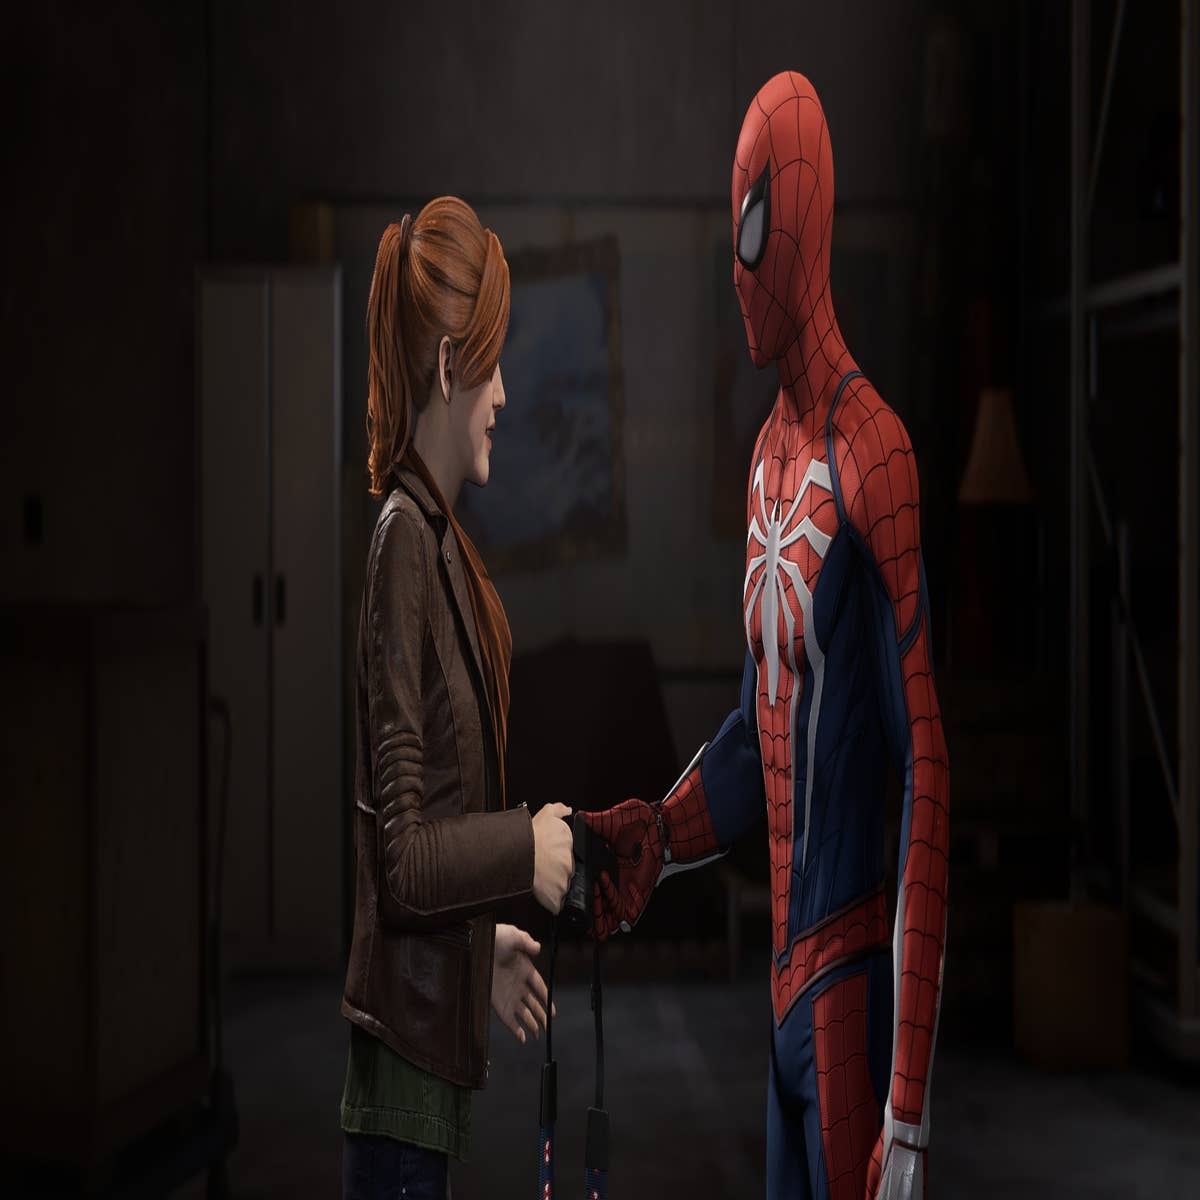 Marvel's Spider-Man Remastered: PC performance, system